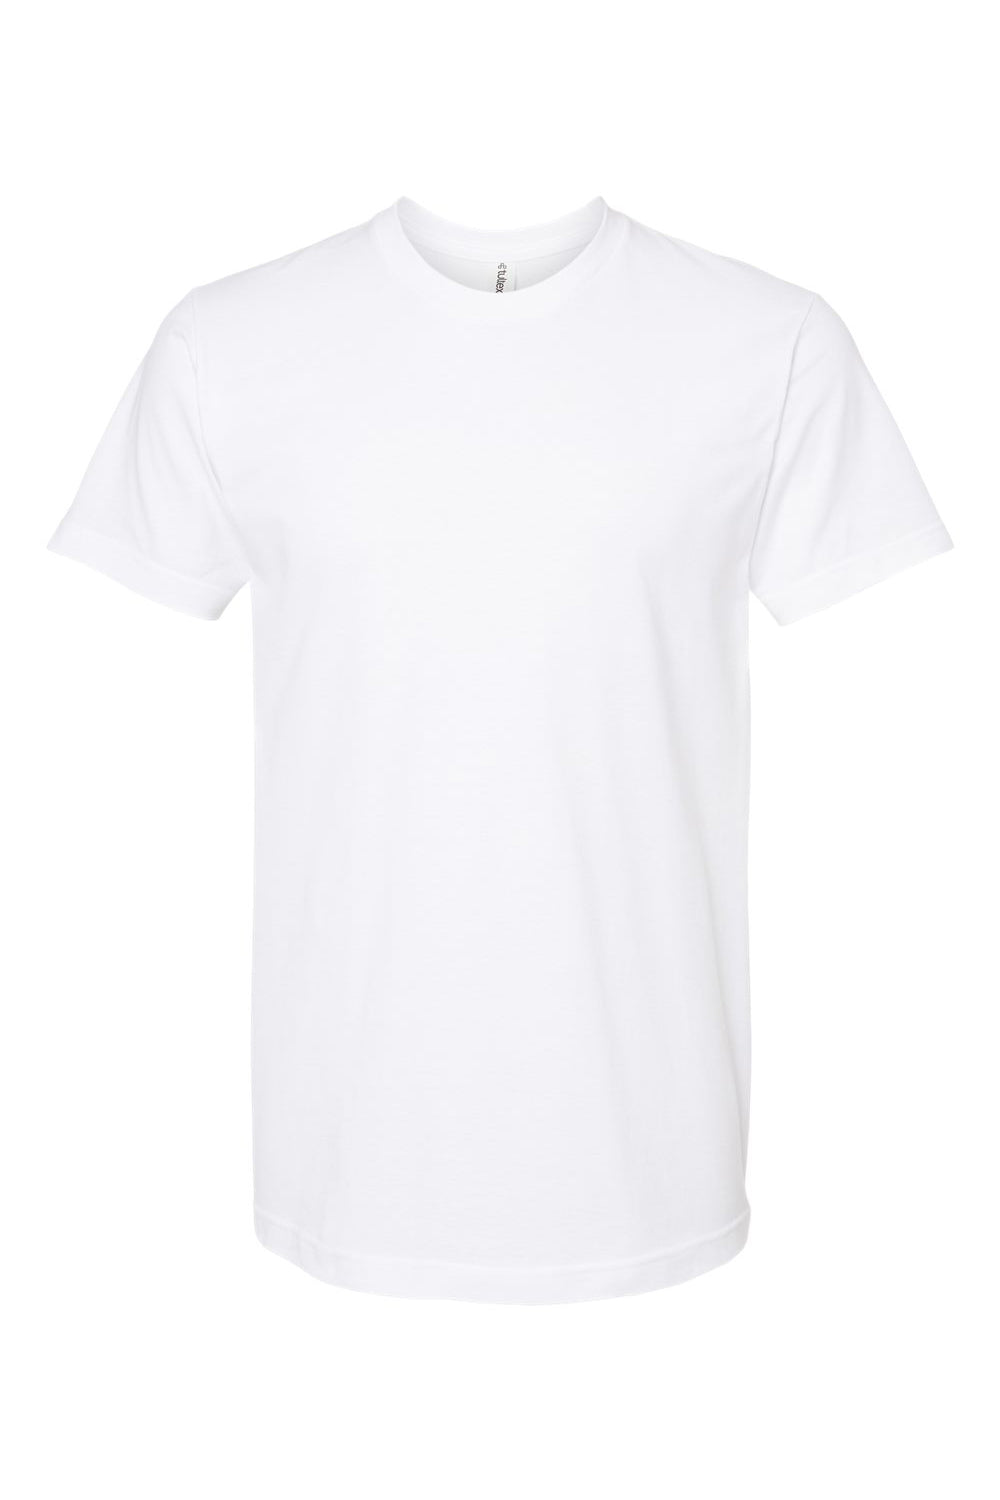 Tultex 202 Mens Fine Jersey Short Sleeve Crewneck T-Shirt White Flat Front